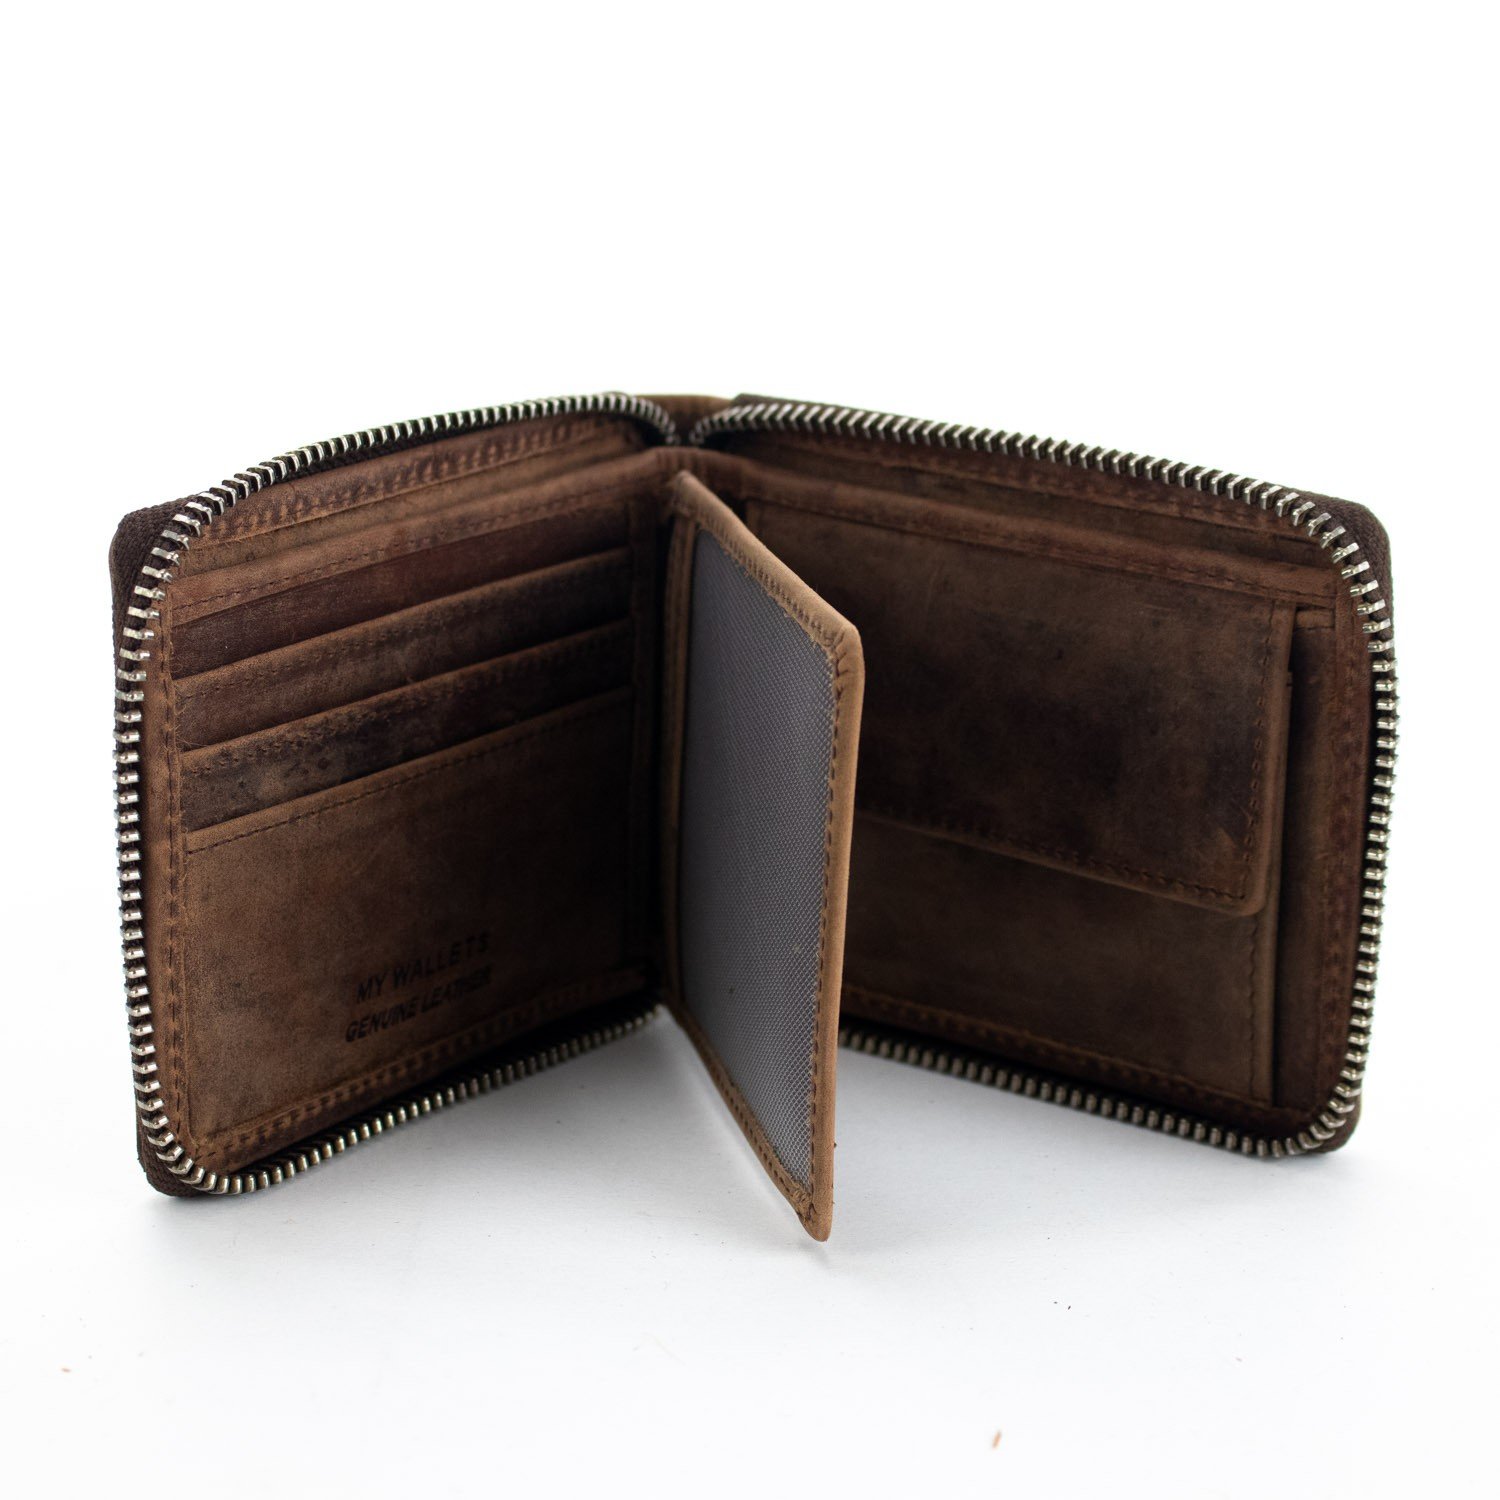 MyWallets Rustic zipper wallet